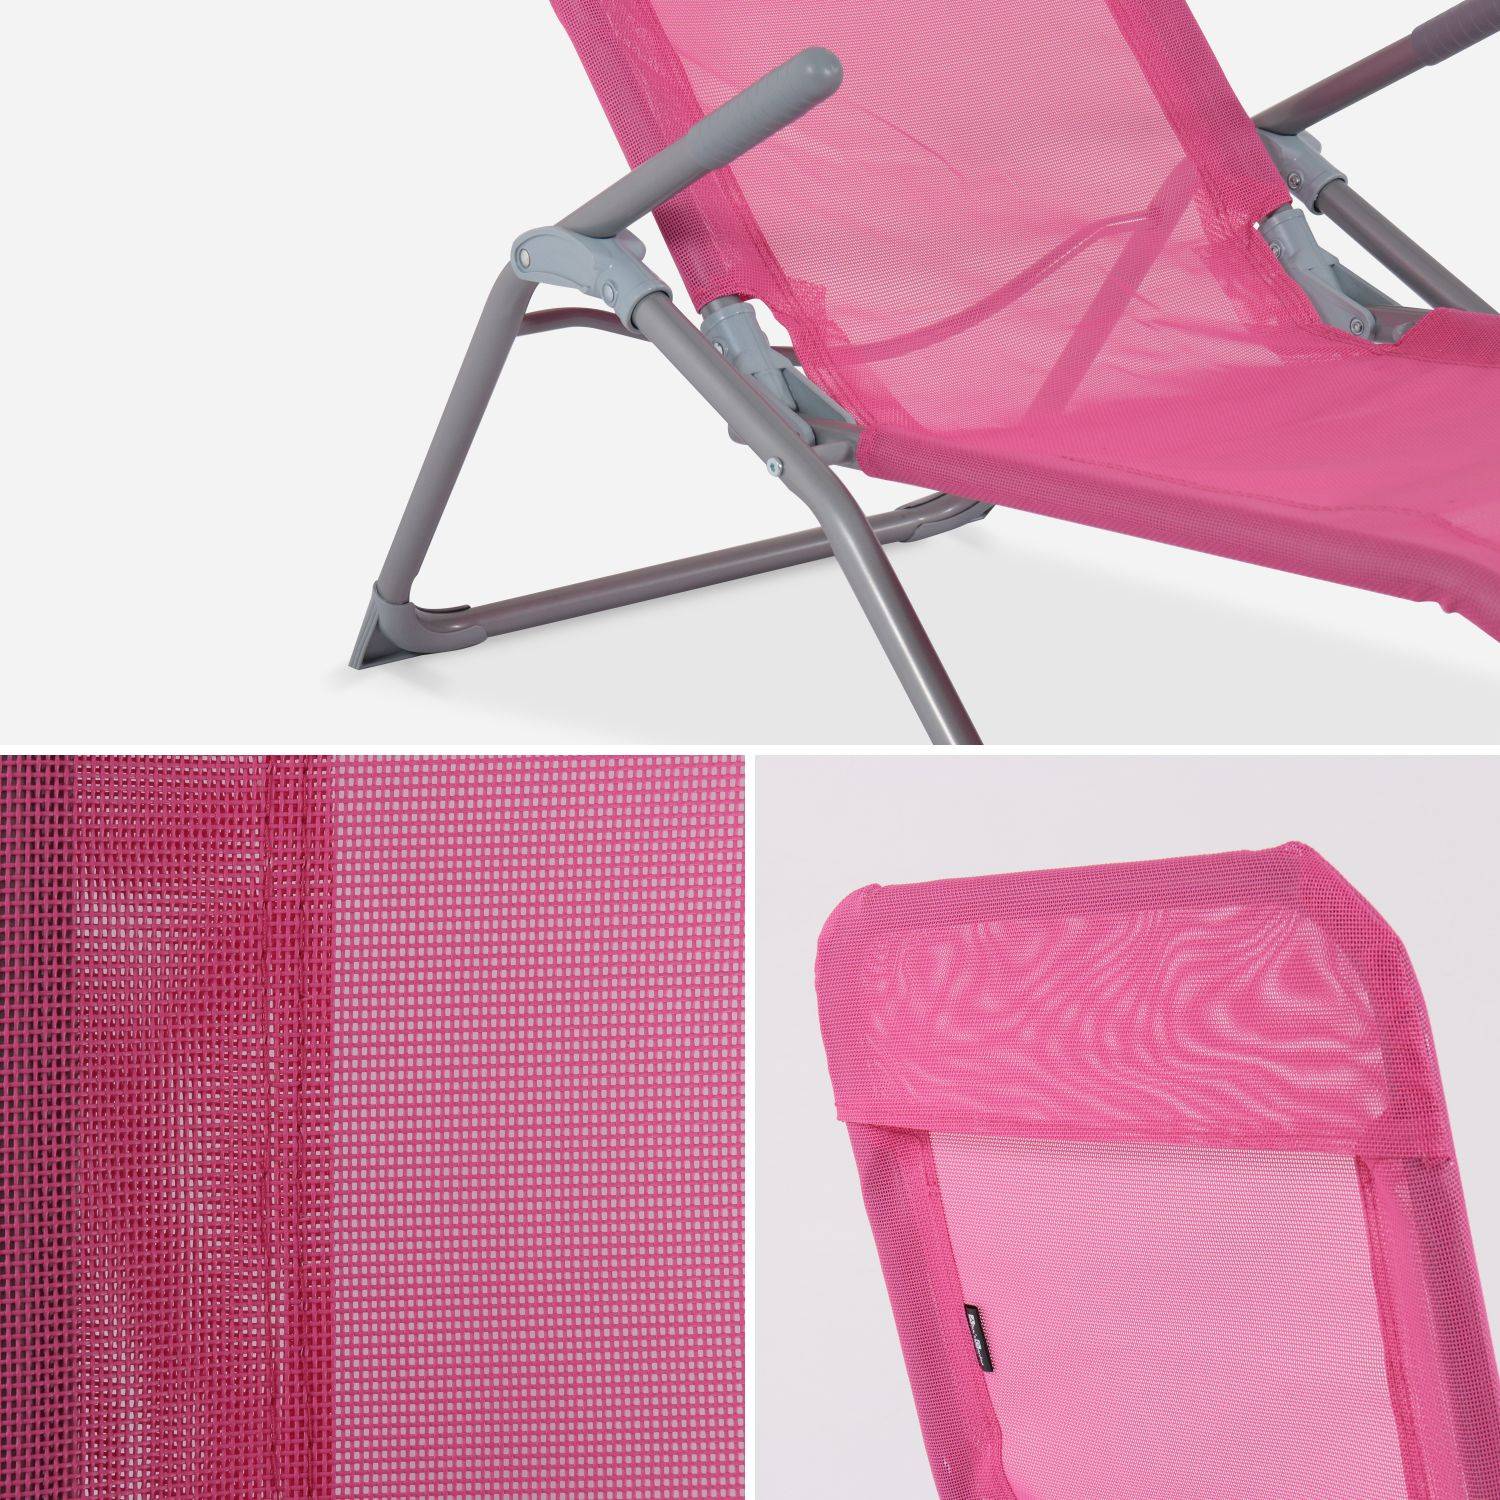 Set van 2 opvouwbare ligstoelen - Levito Roze - Ligstoelen van textileen, 2 posities, opvouwbare ligstoelen Photo4